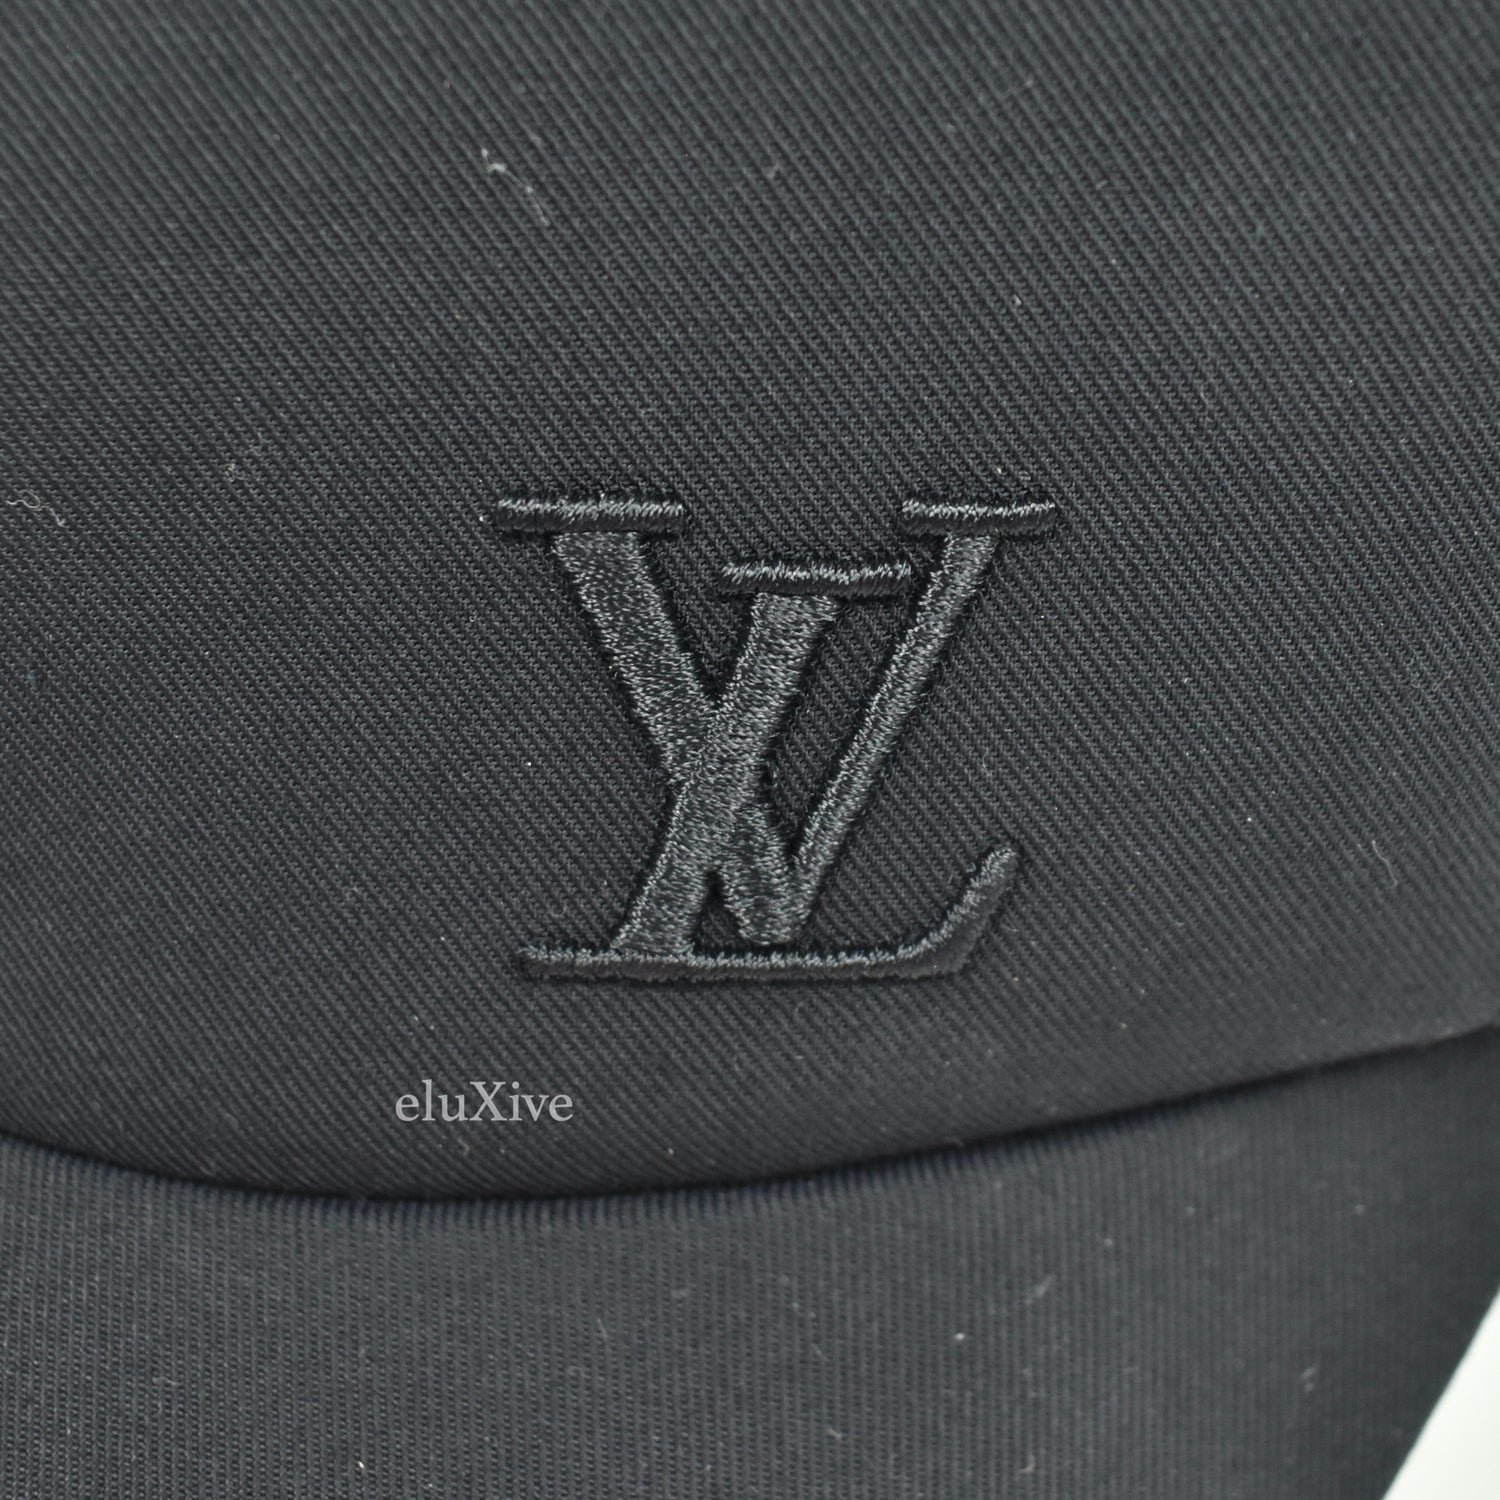 Louis Vuitton M77114 Black Men Monogram Mesh Hat Baseball Cap L